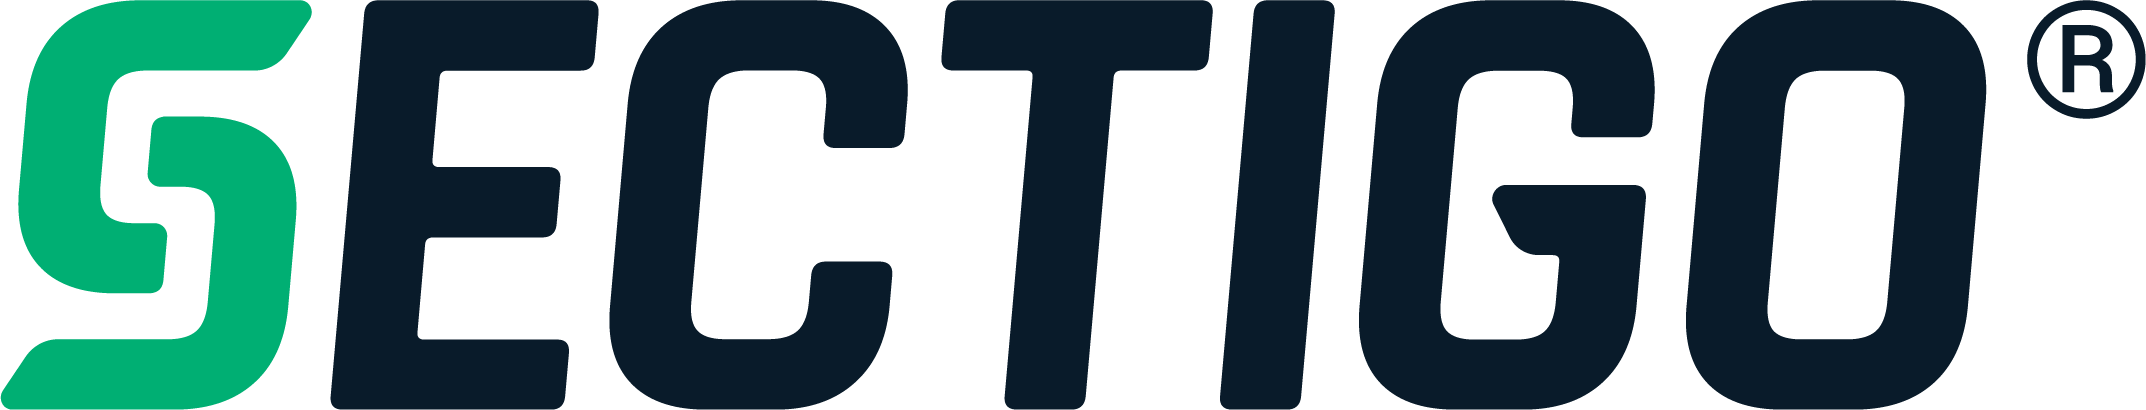 EM-Racing SSL Trust Logo